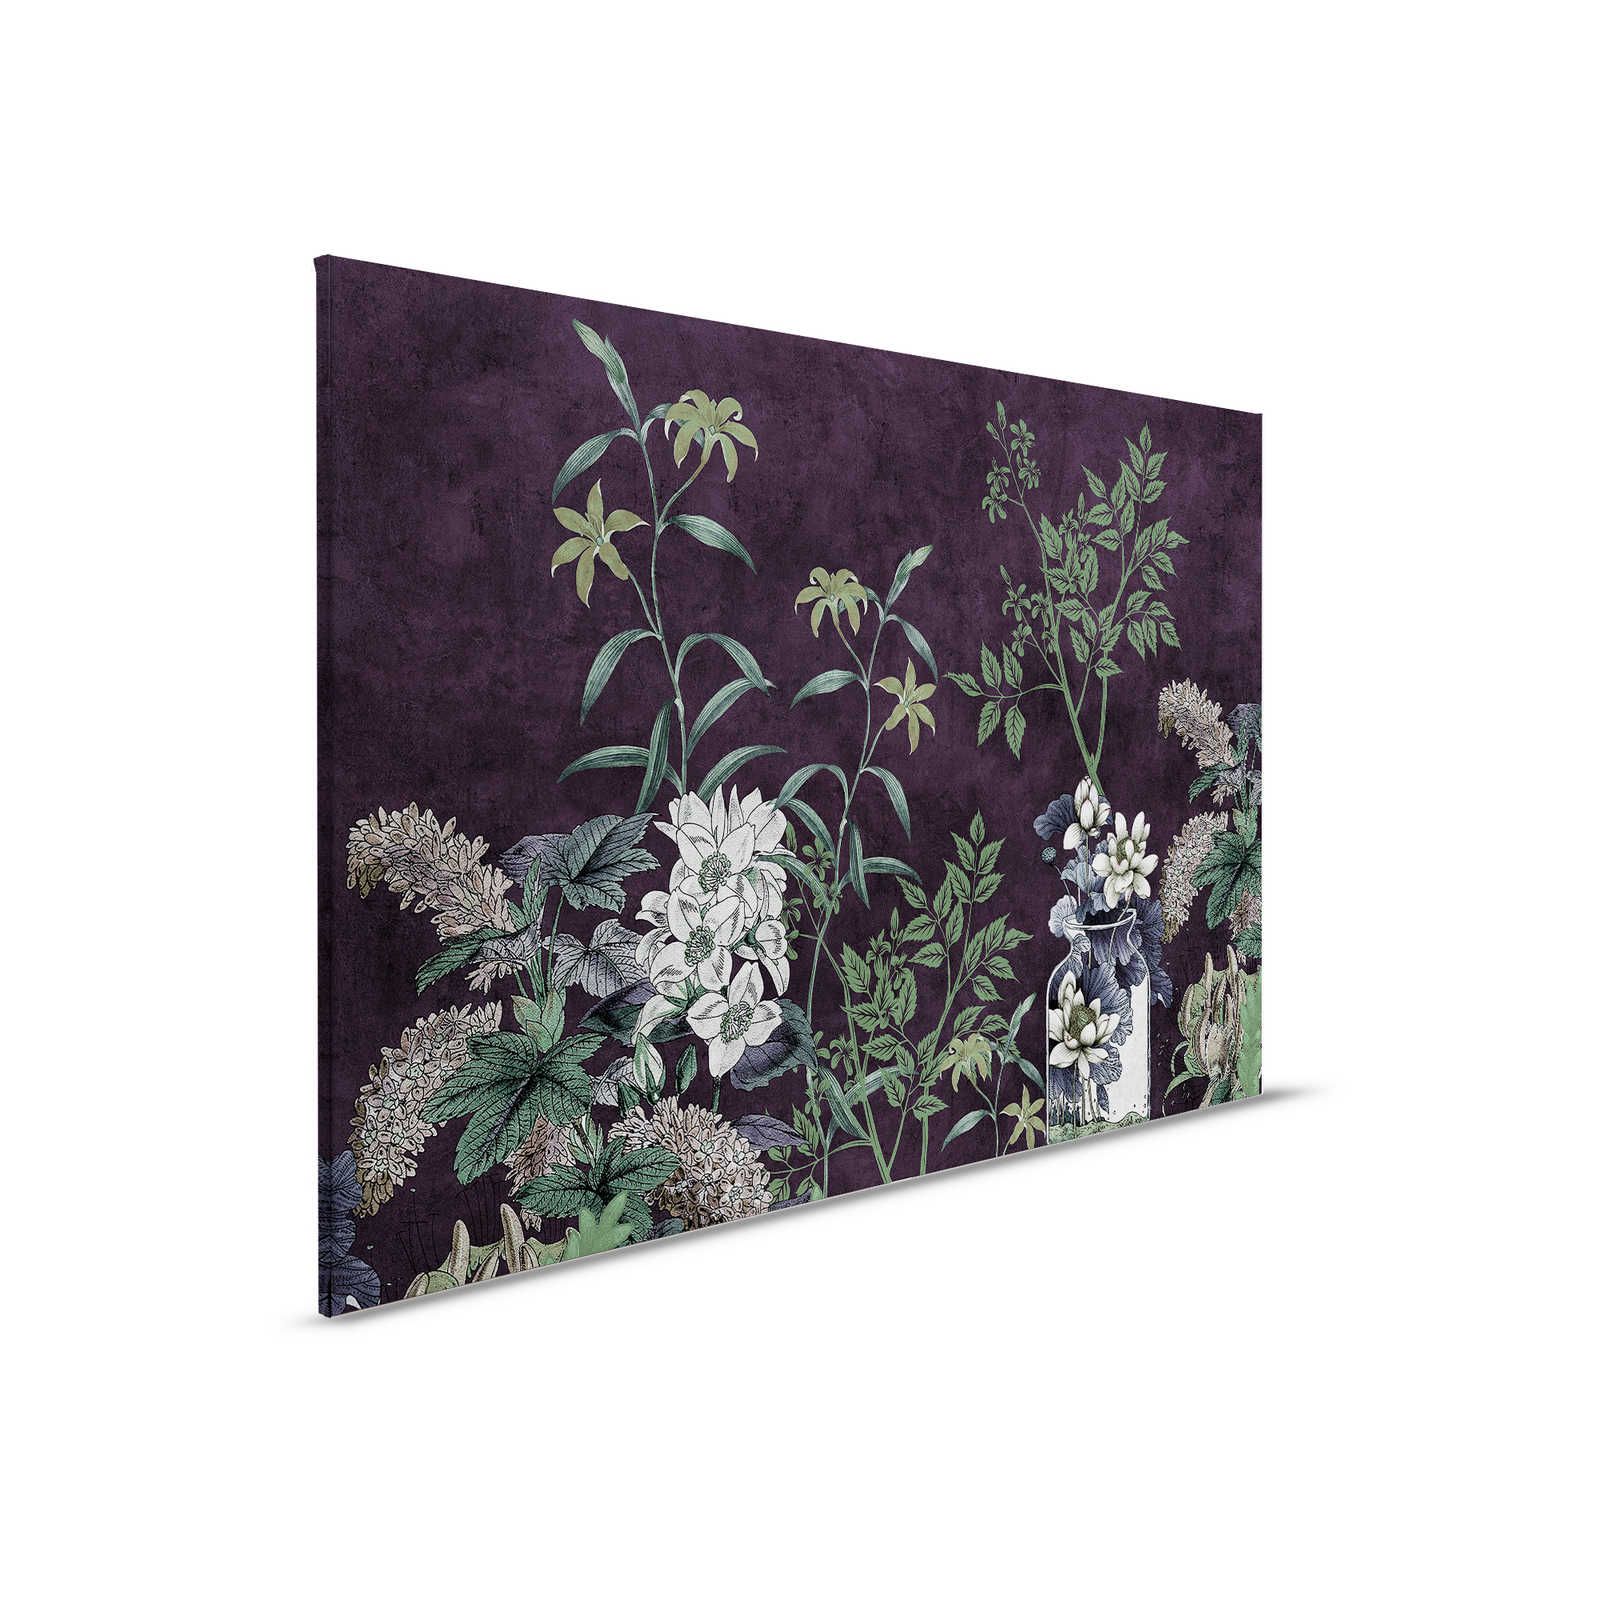 Dark Room 1 - Black Canvas Painting Botanical Pattern Green - 0.90 m x 0.60 m
